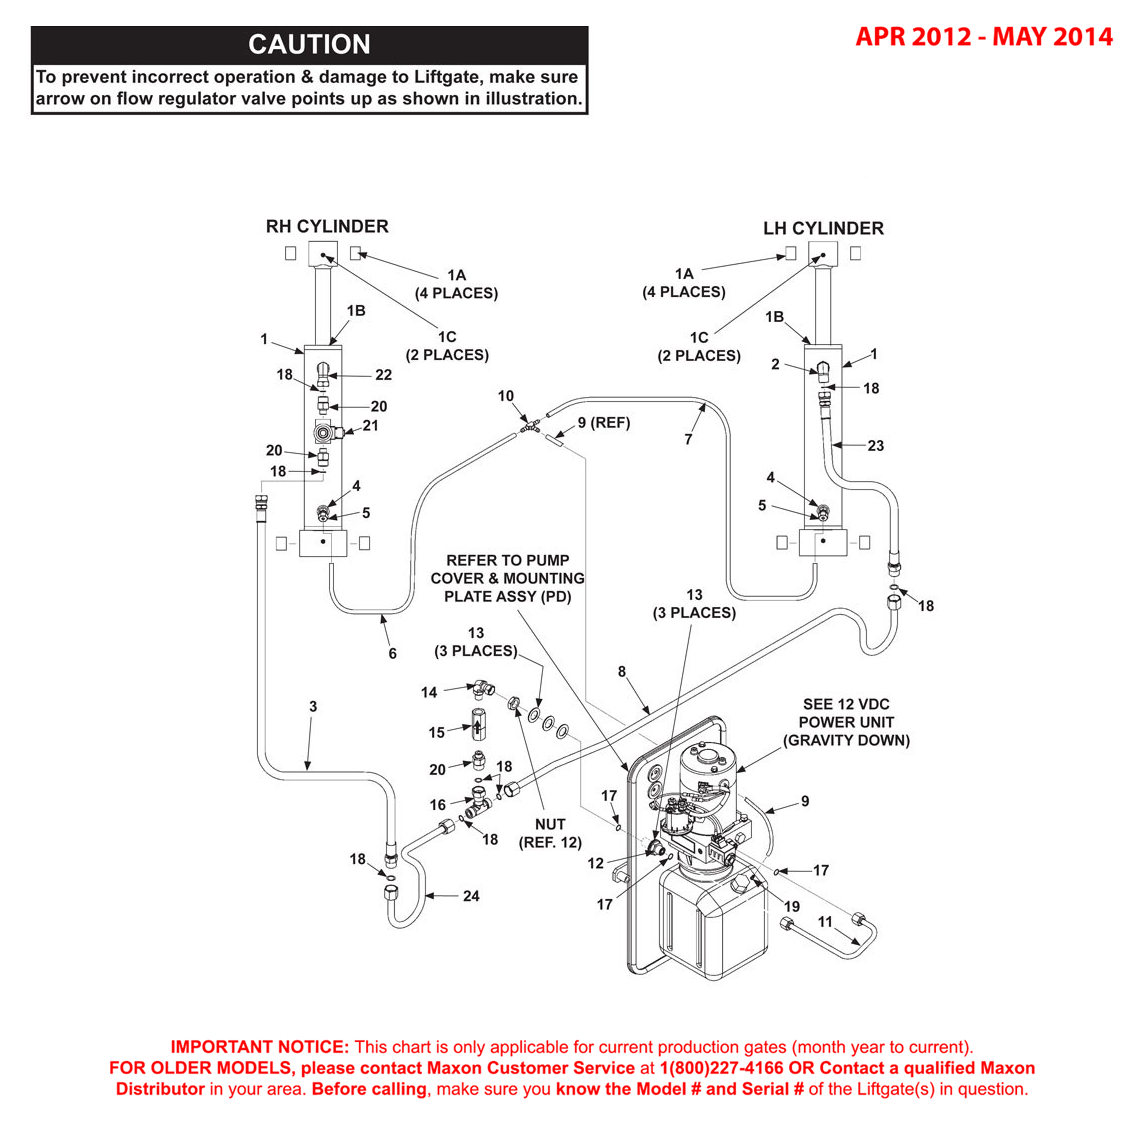 Maxon GPTLR (Apr 2012 - May 2014) Gravity Down Hydraulic Components Diagram